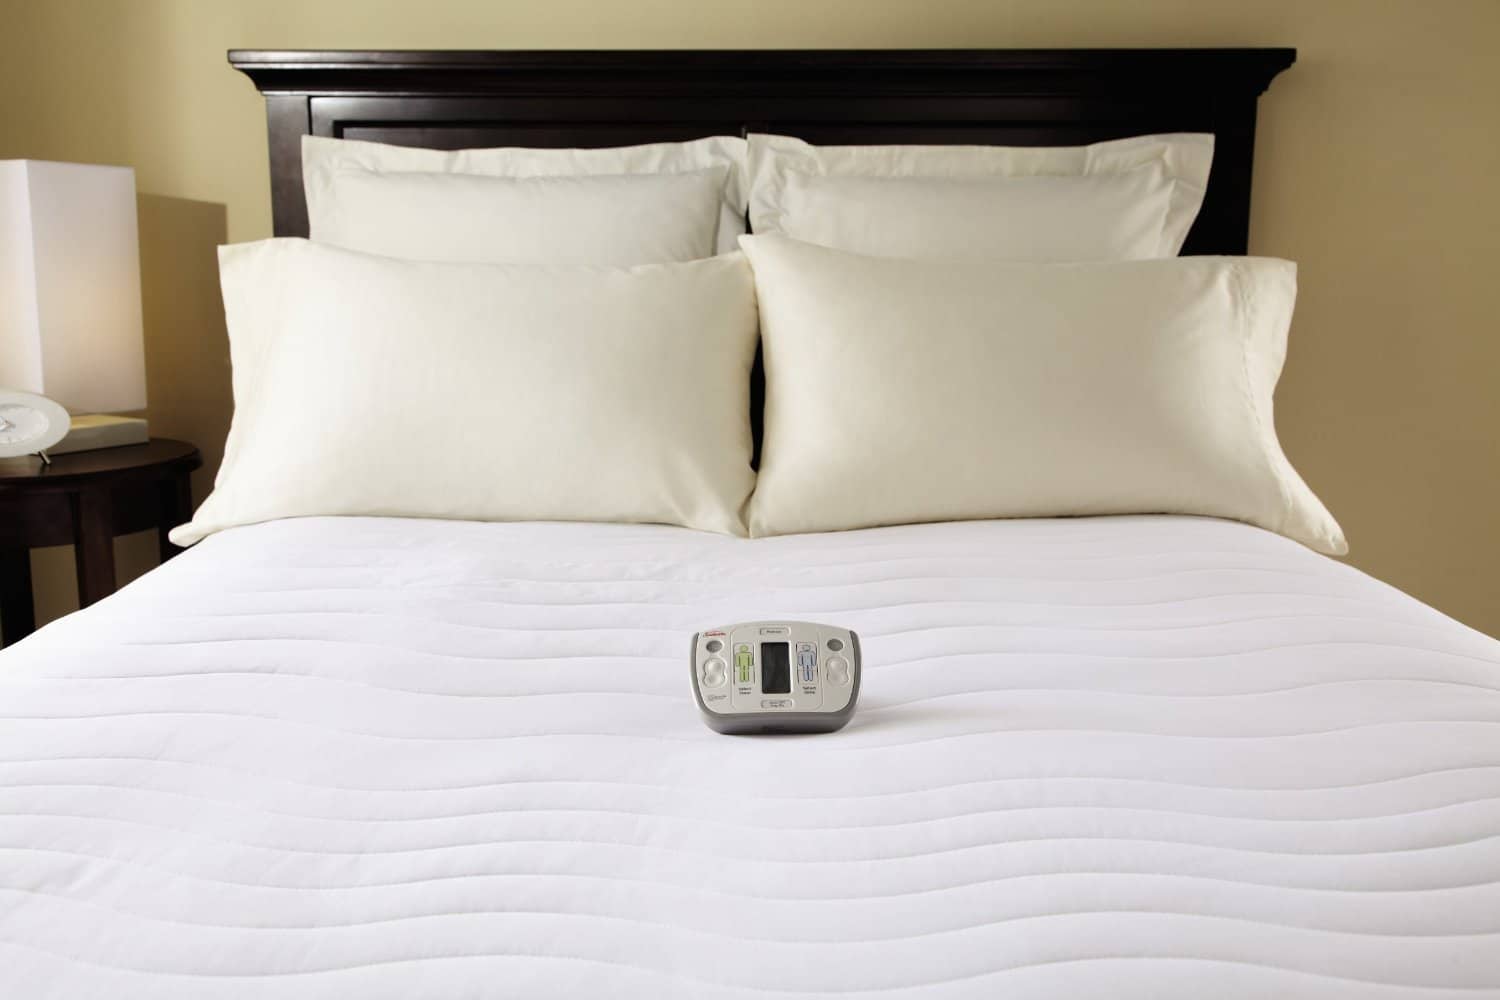 smart plug controlled heated mattress pad